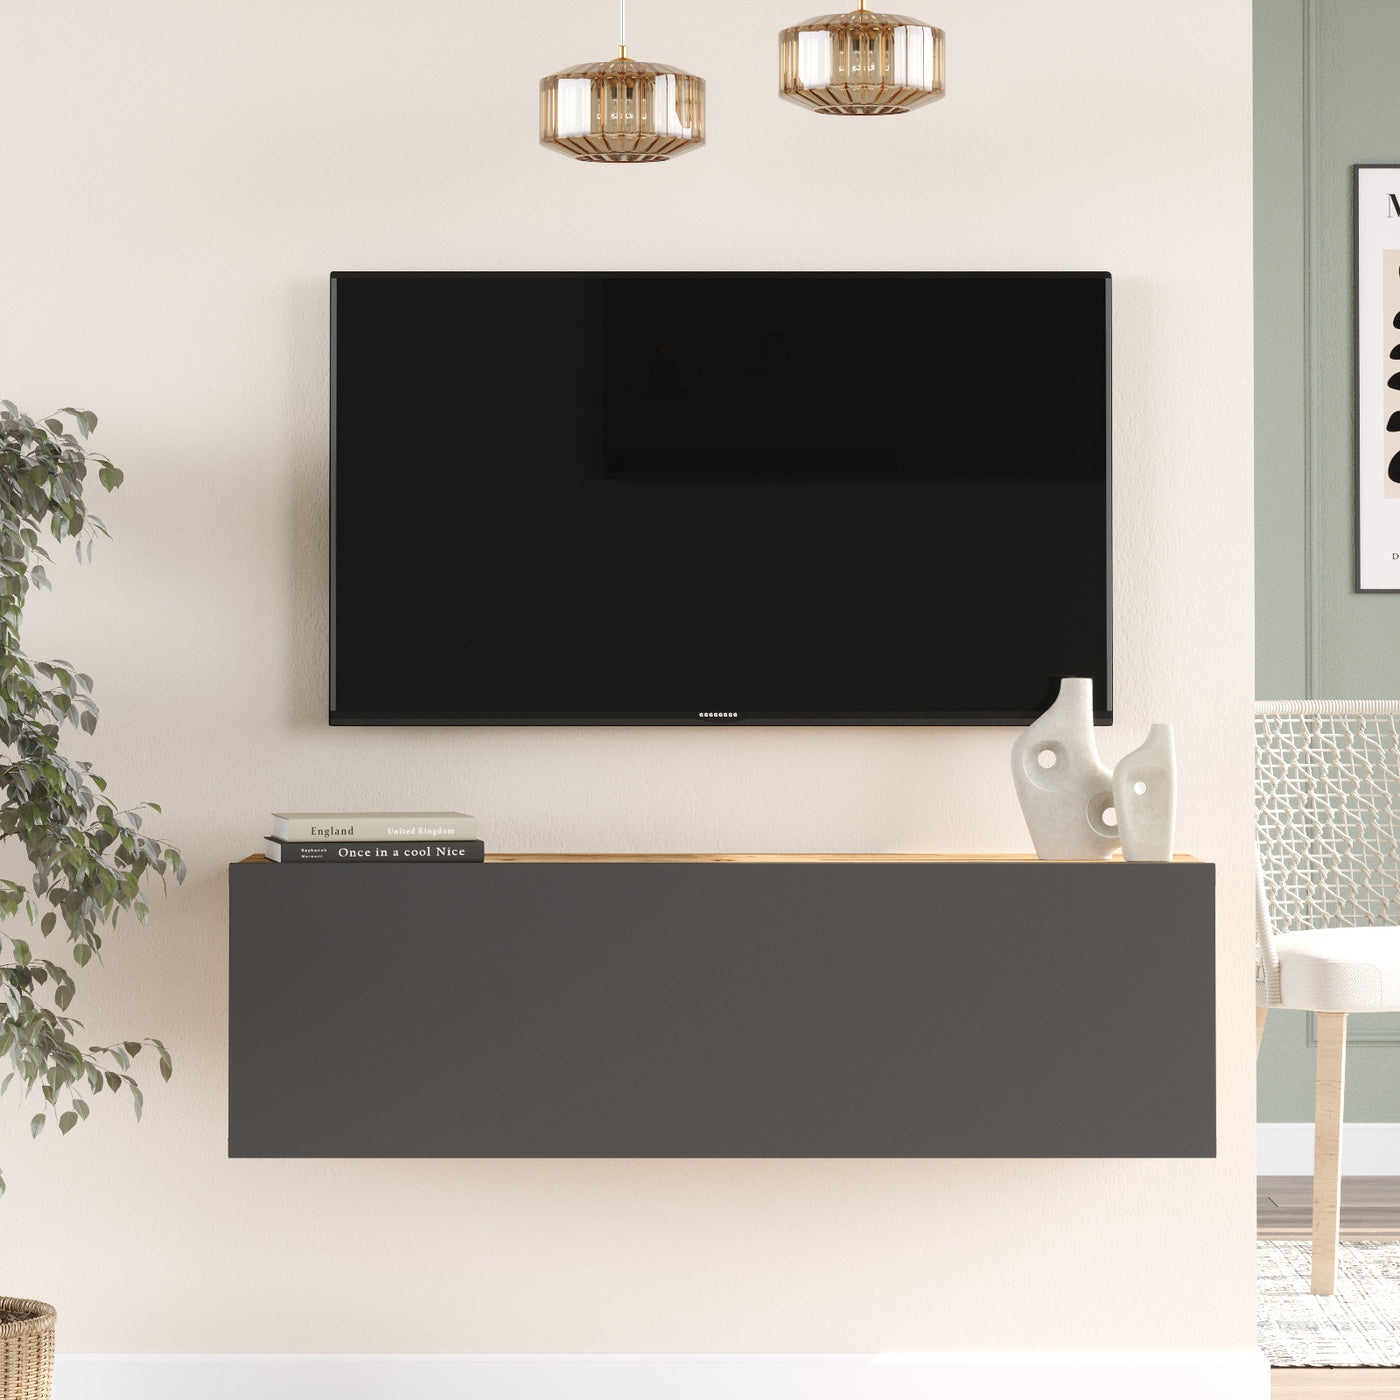 Sivon צבע אורן משולב פחם- FR12-S מזנון טלוויזיה צף מבית HOMAX - משלוח חינם